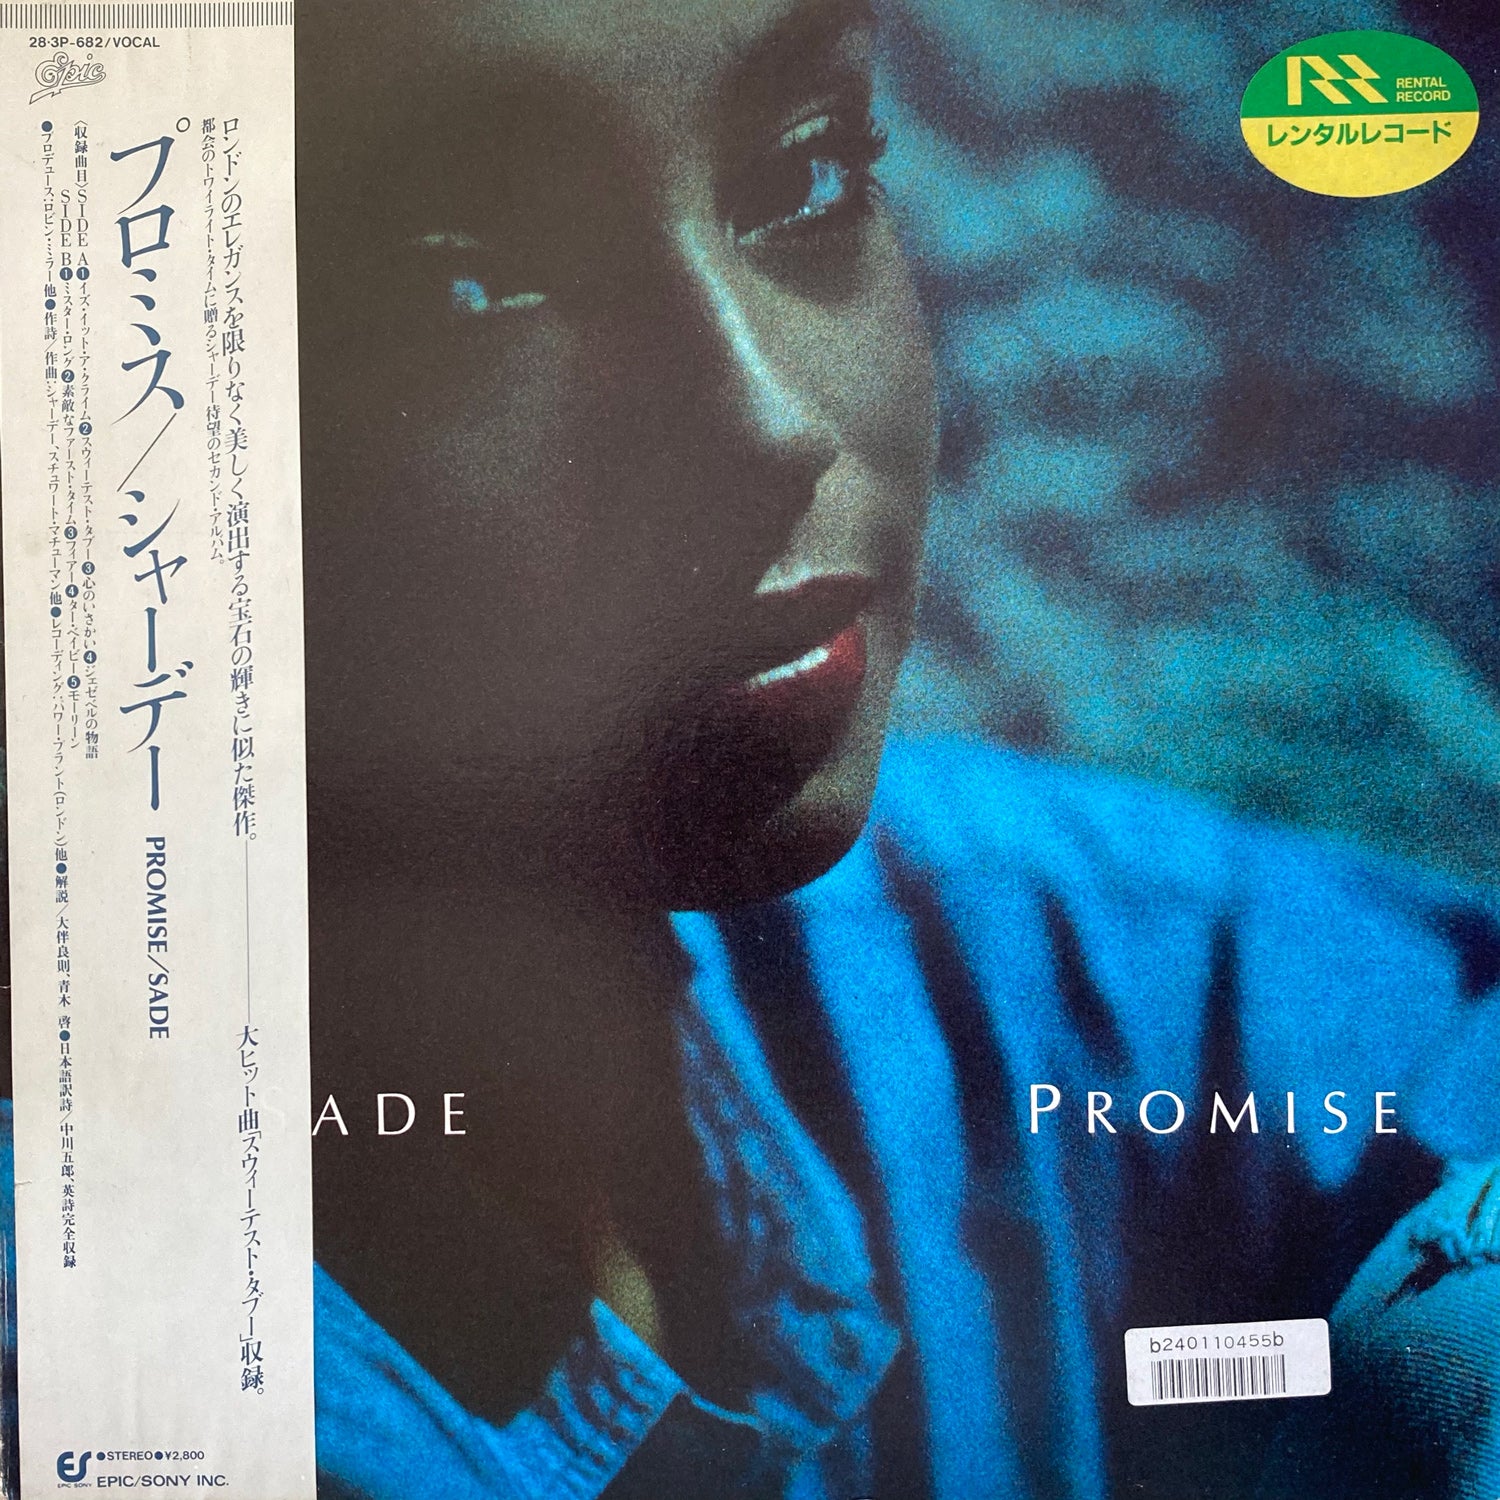 Sade - Promise [Japanese Pressing]